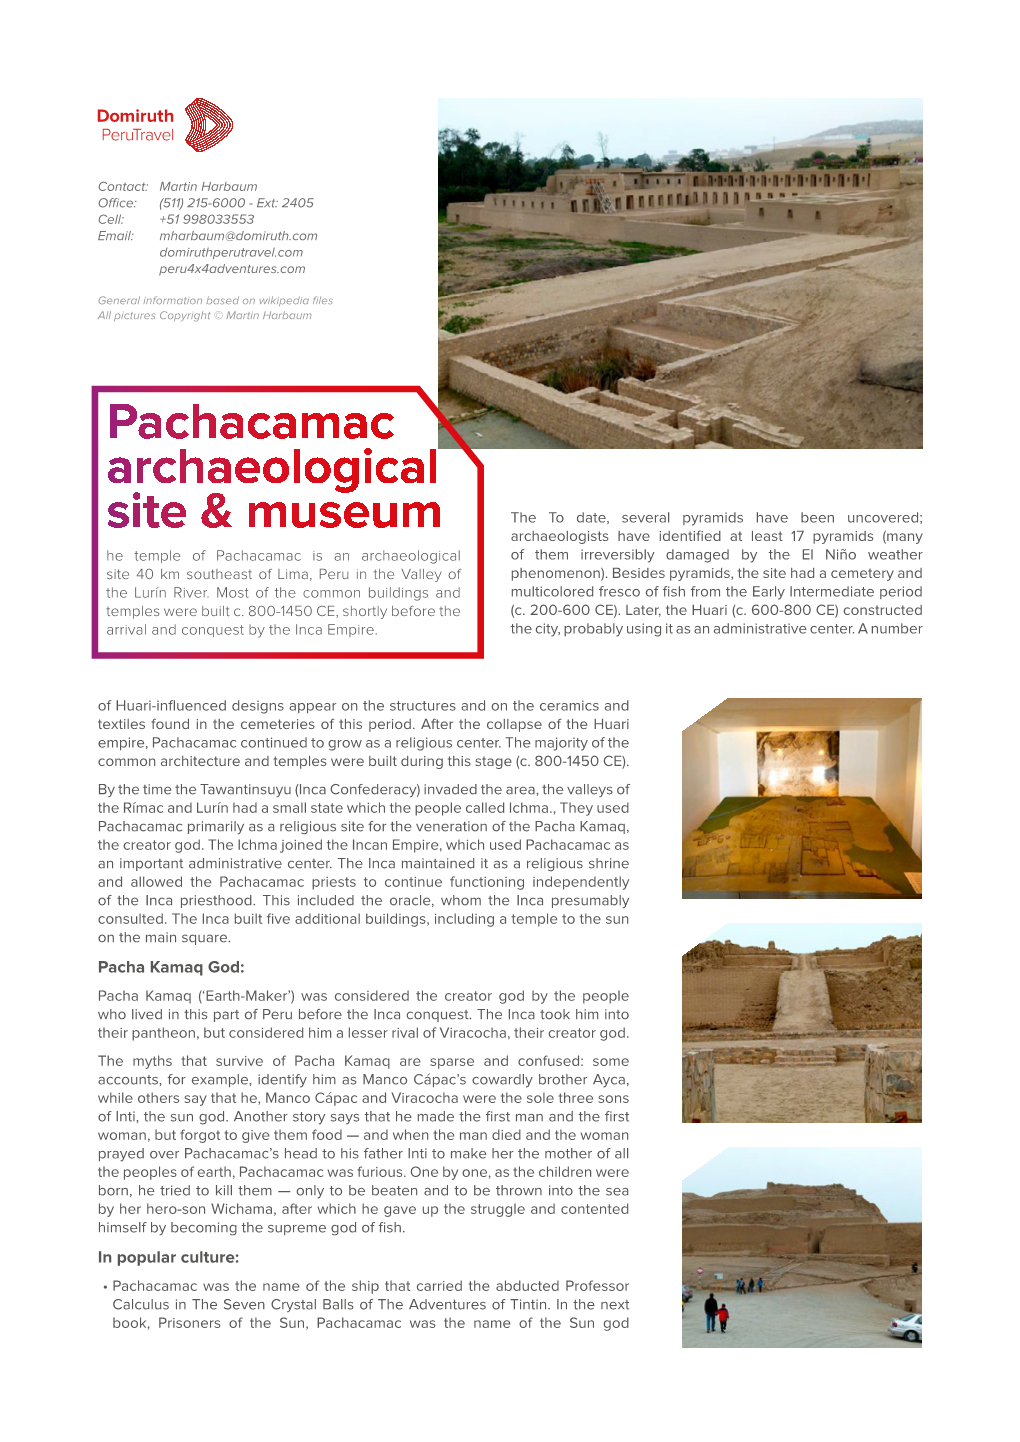 Pachacamac Archaeological Site & Museum